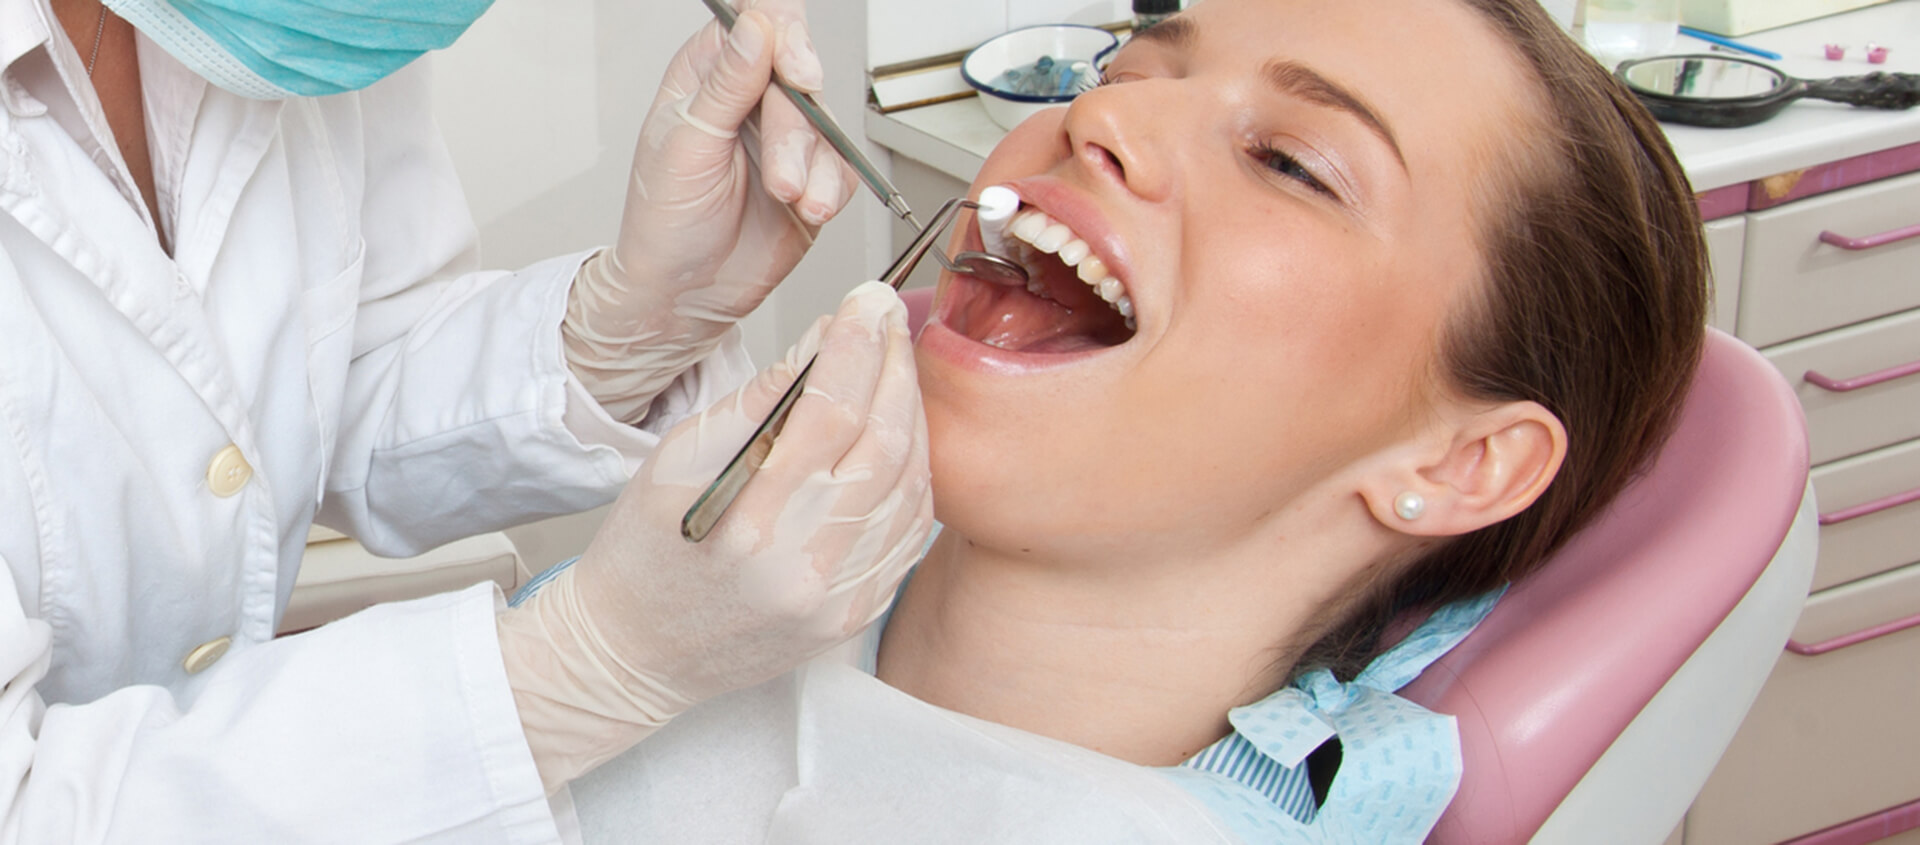 Sedation Dentist in Middletown Area Explains the Benefits of Sedation Dentistry